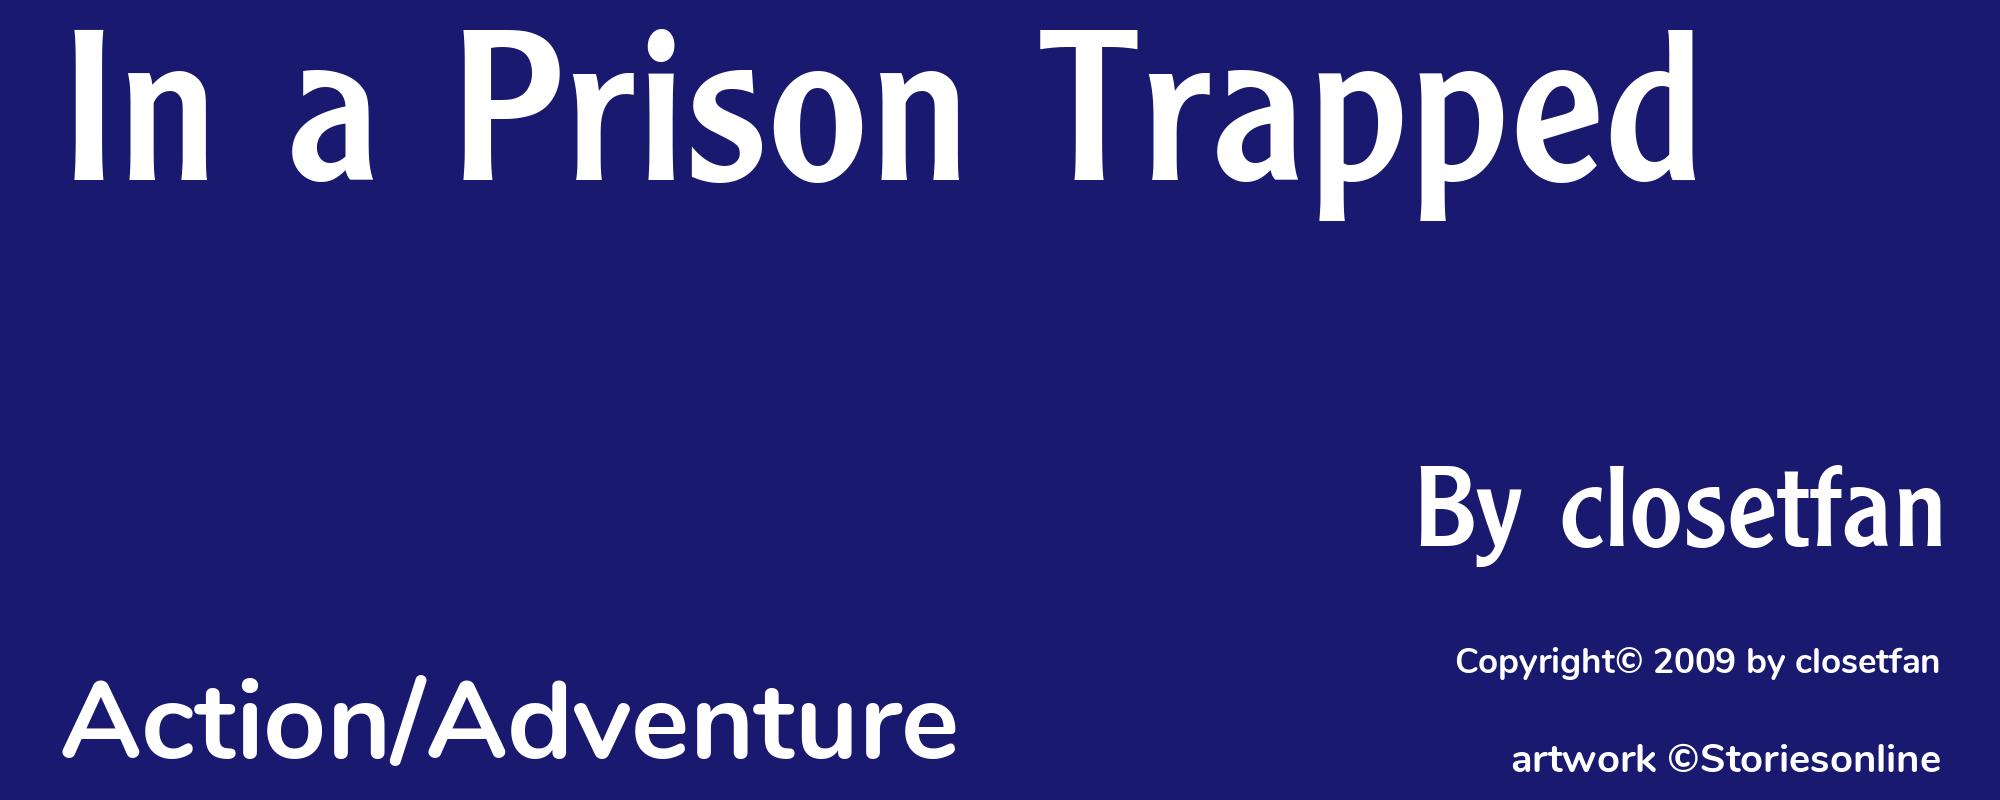 In a Prison Trapped - Cover